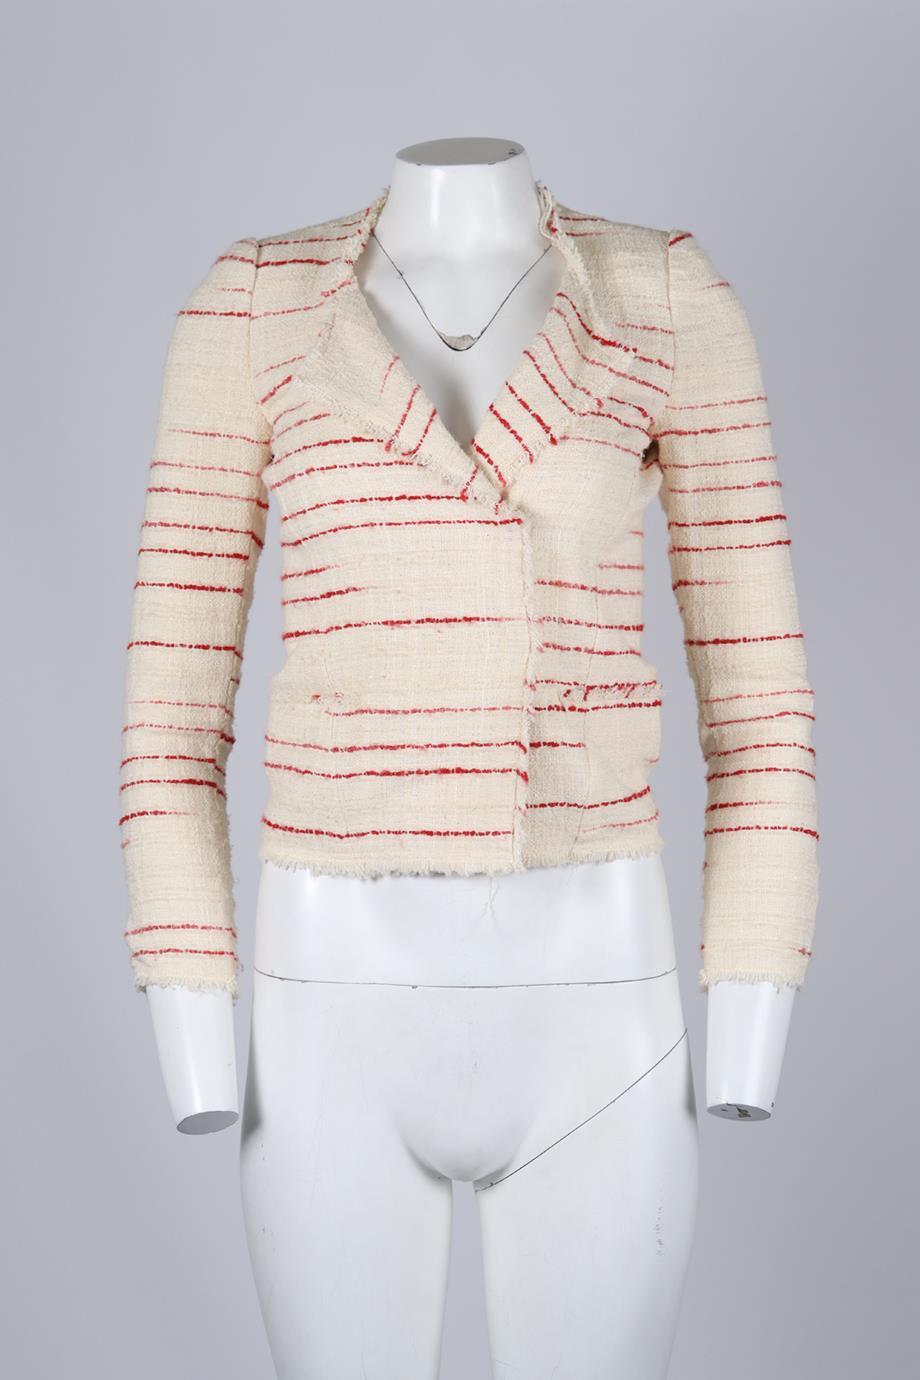 Isabel Marant Étoile Cotton Blend Tweed Jacket. Red and cream. Long Sleeve. Crewneck. Hook and eye fastening - front. 59% Cotton, 29% acrylic, 9% polyester, 2% polyamide, 1% elastane. FR 34 (UK 6, US 2, IT 38). Shoulder to shoulder: 12.2 in. Bust: